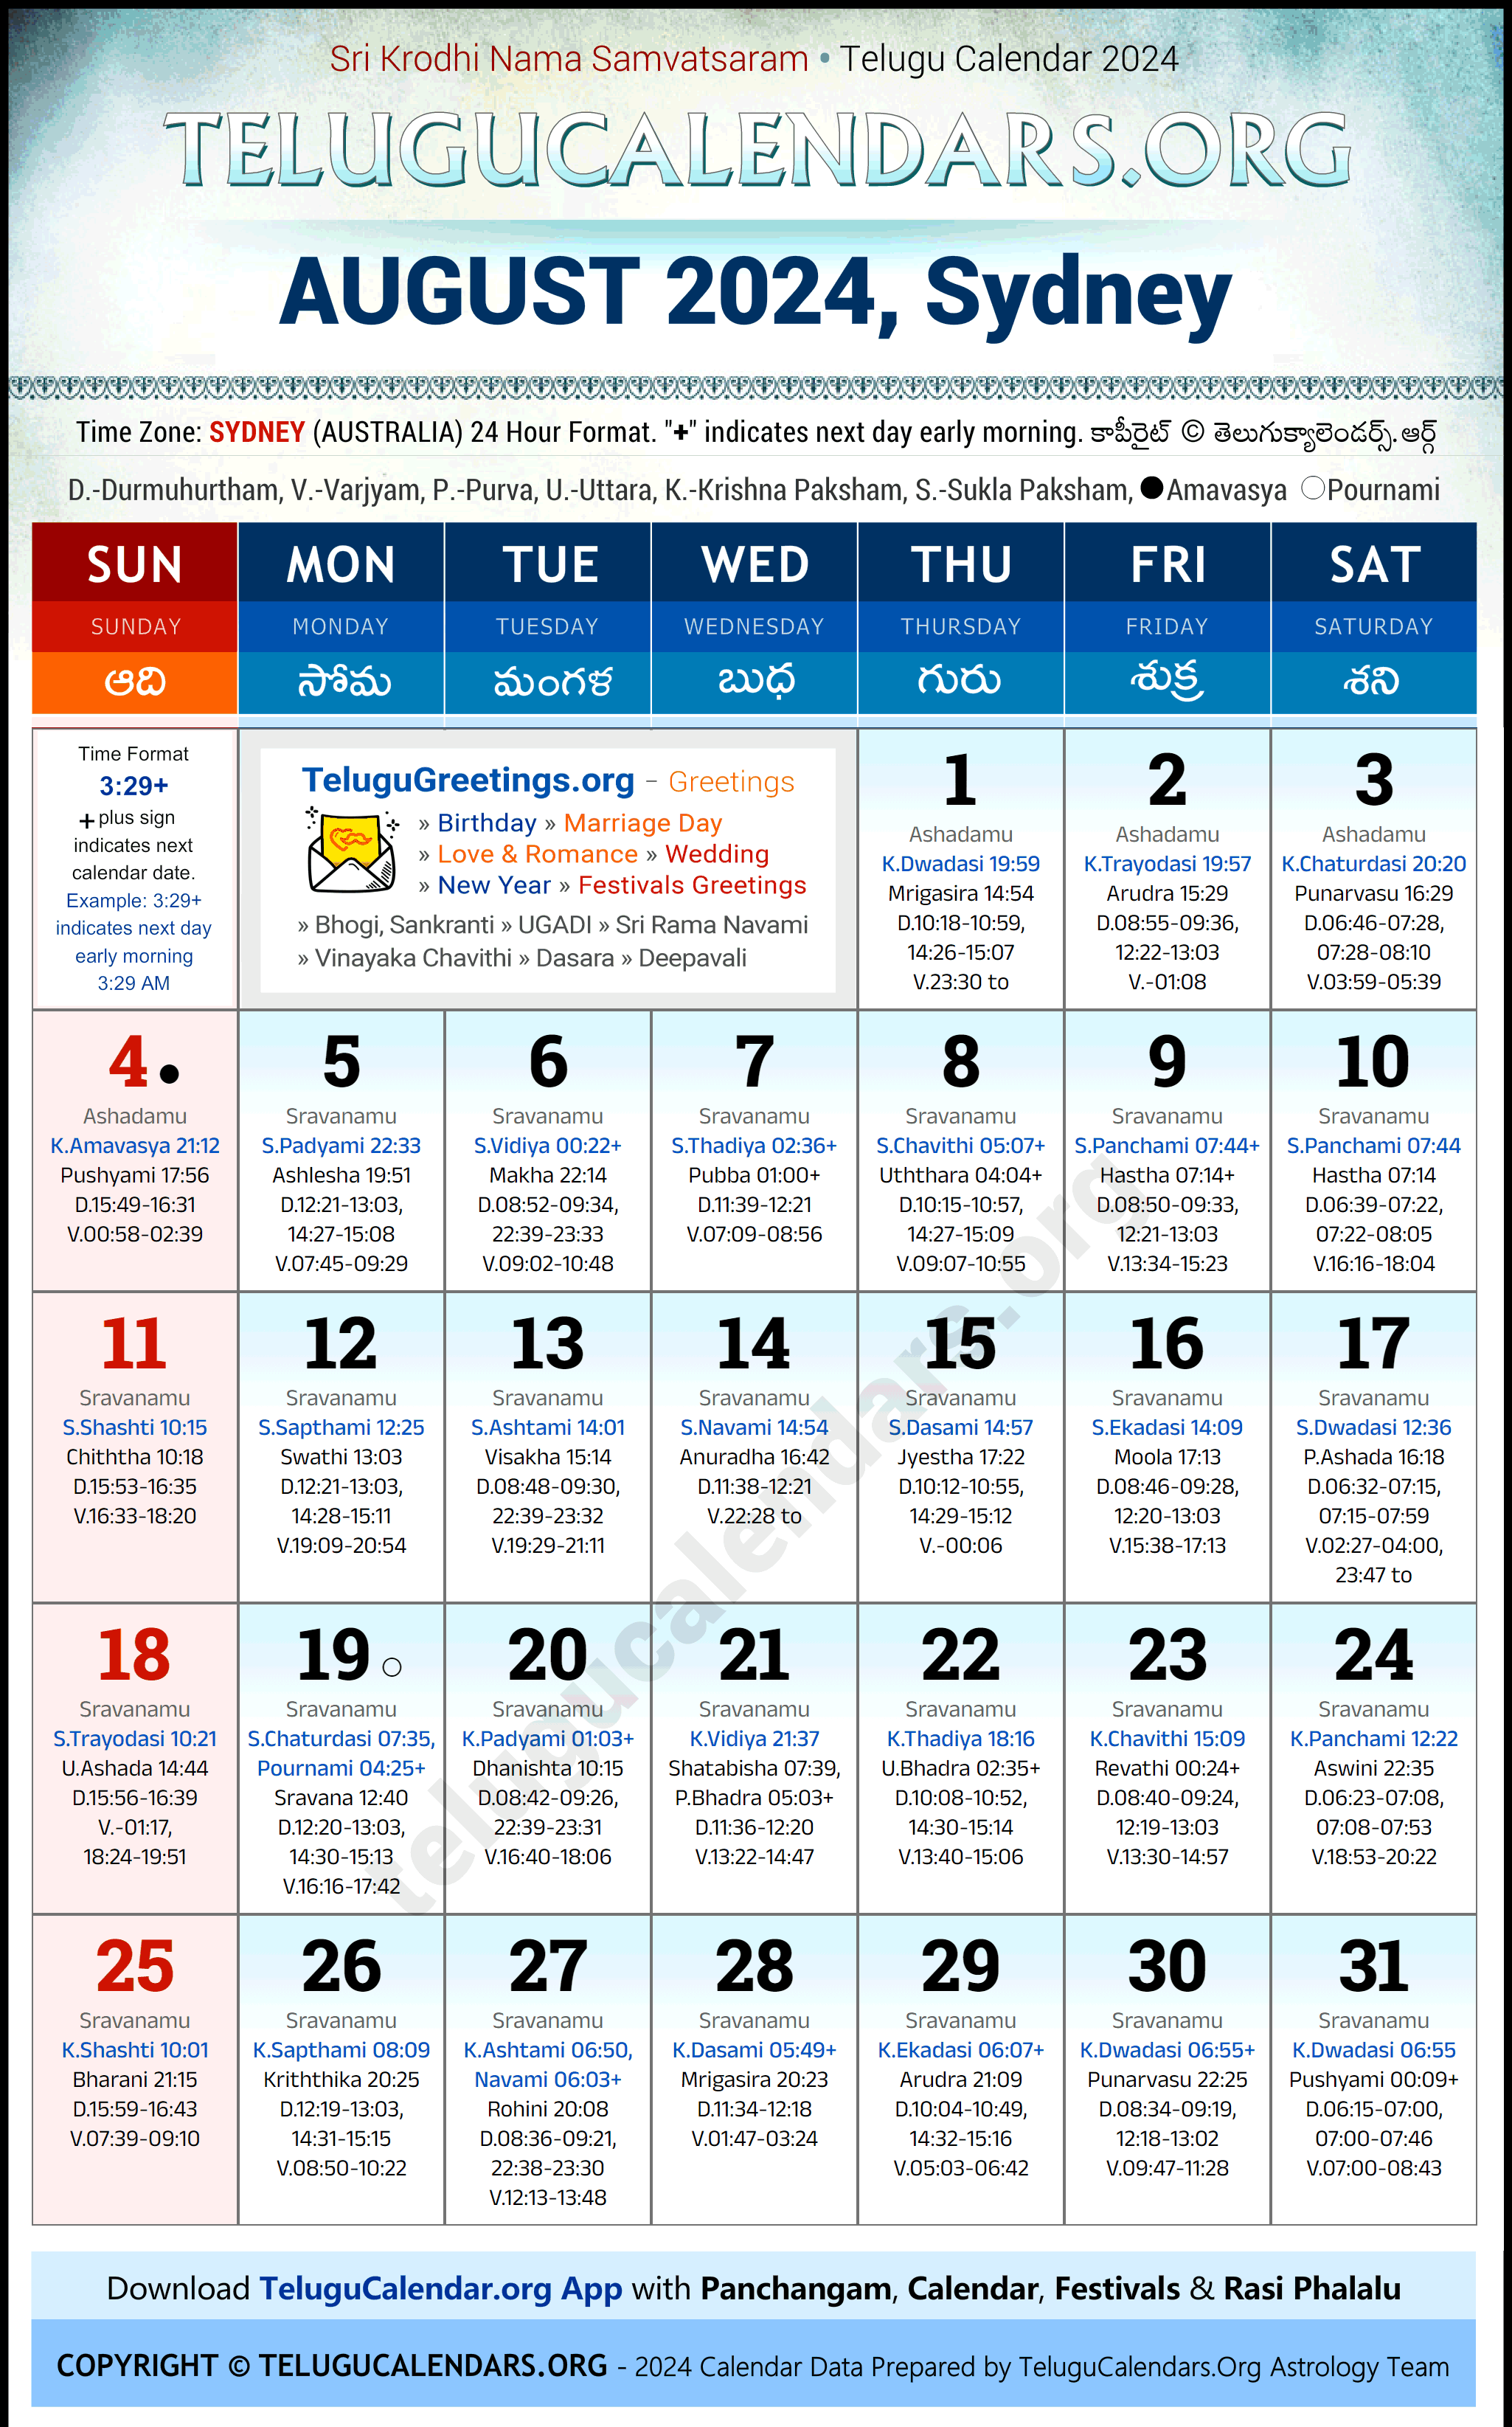 Telugu Calendar 2024 August Festivals for Sydney